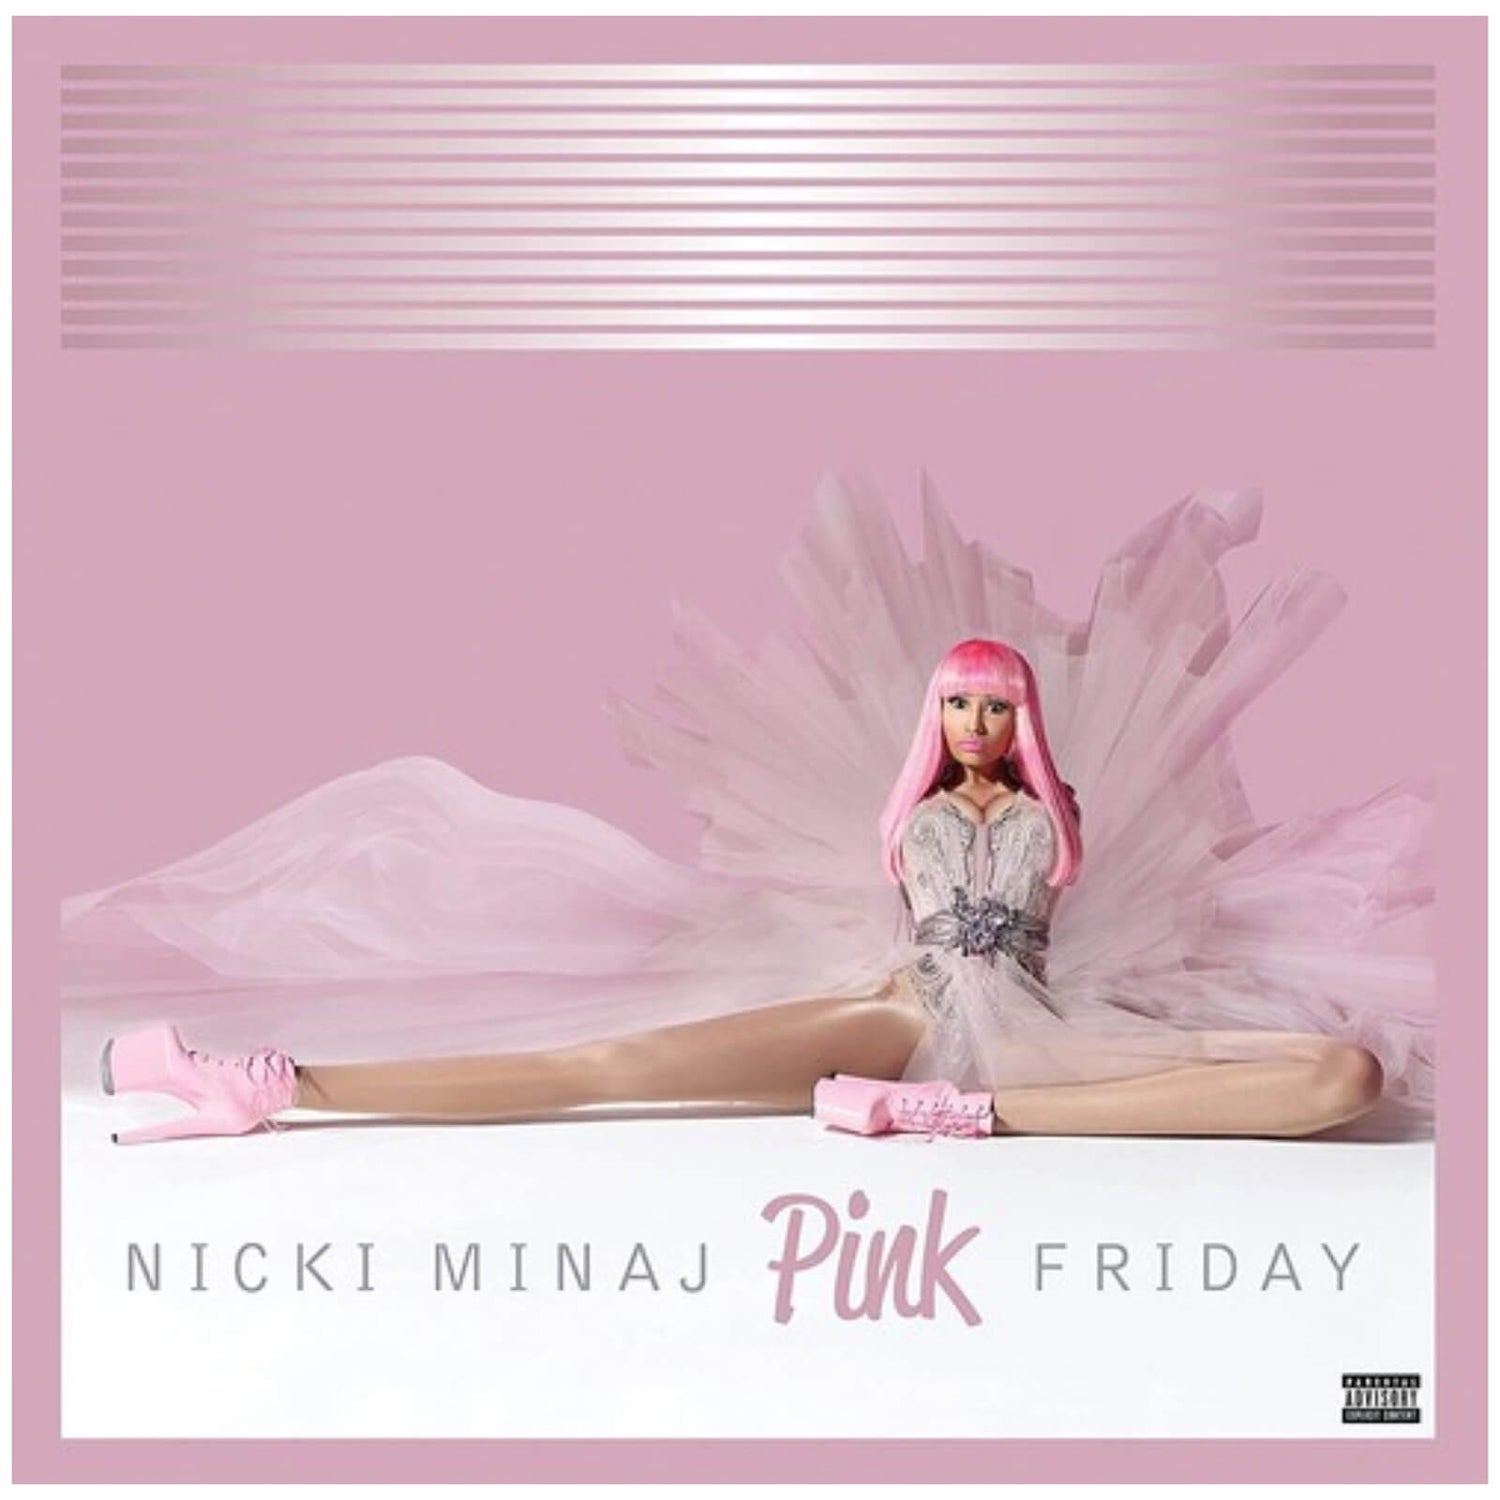 Nicki Minaj - Pink Friday: 10th Anniversary Deluxe Edition Vinyl 3LP (Pink & White Swirl)